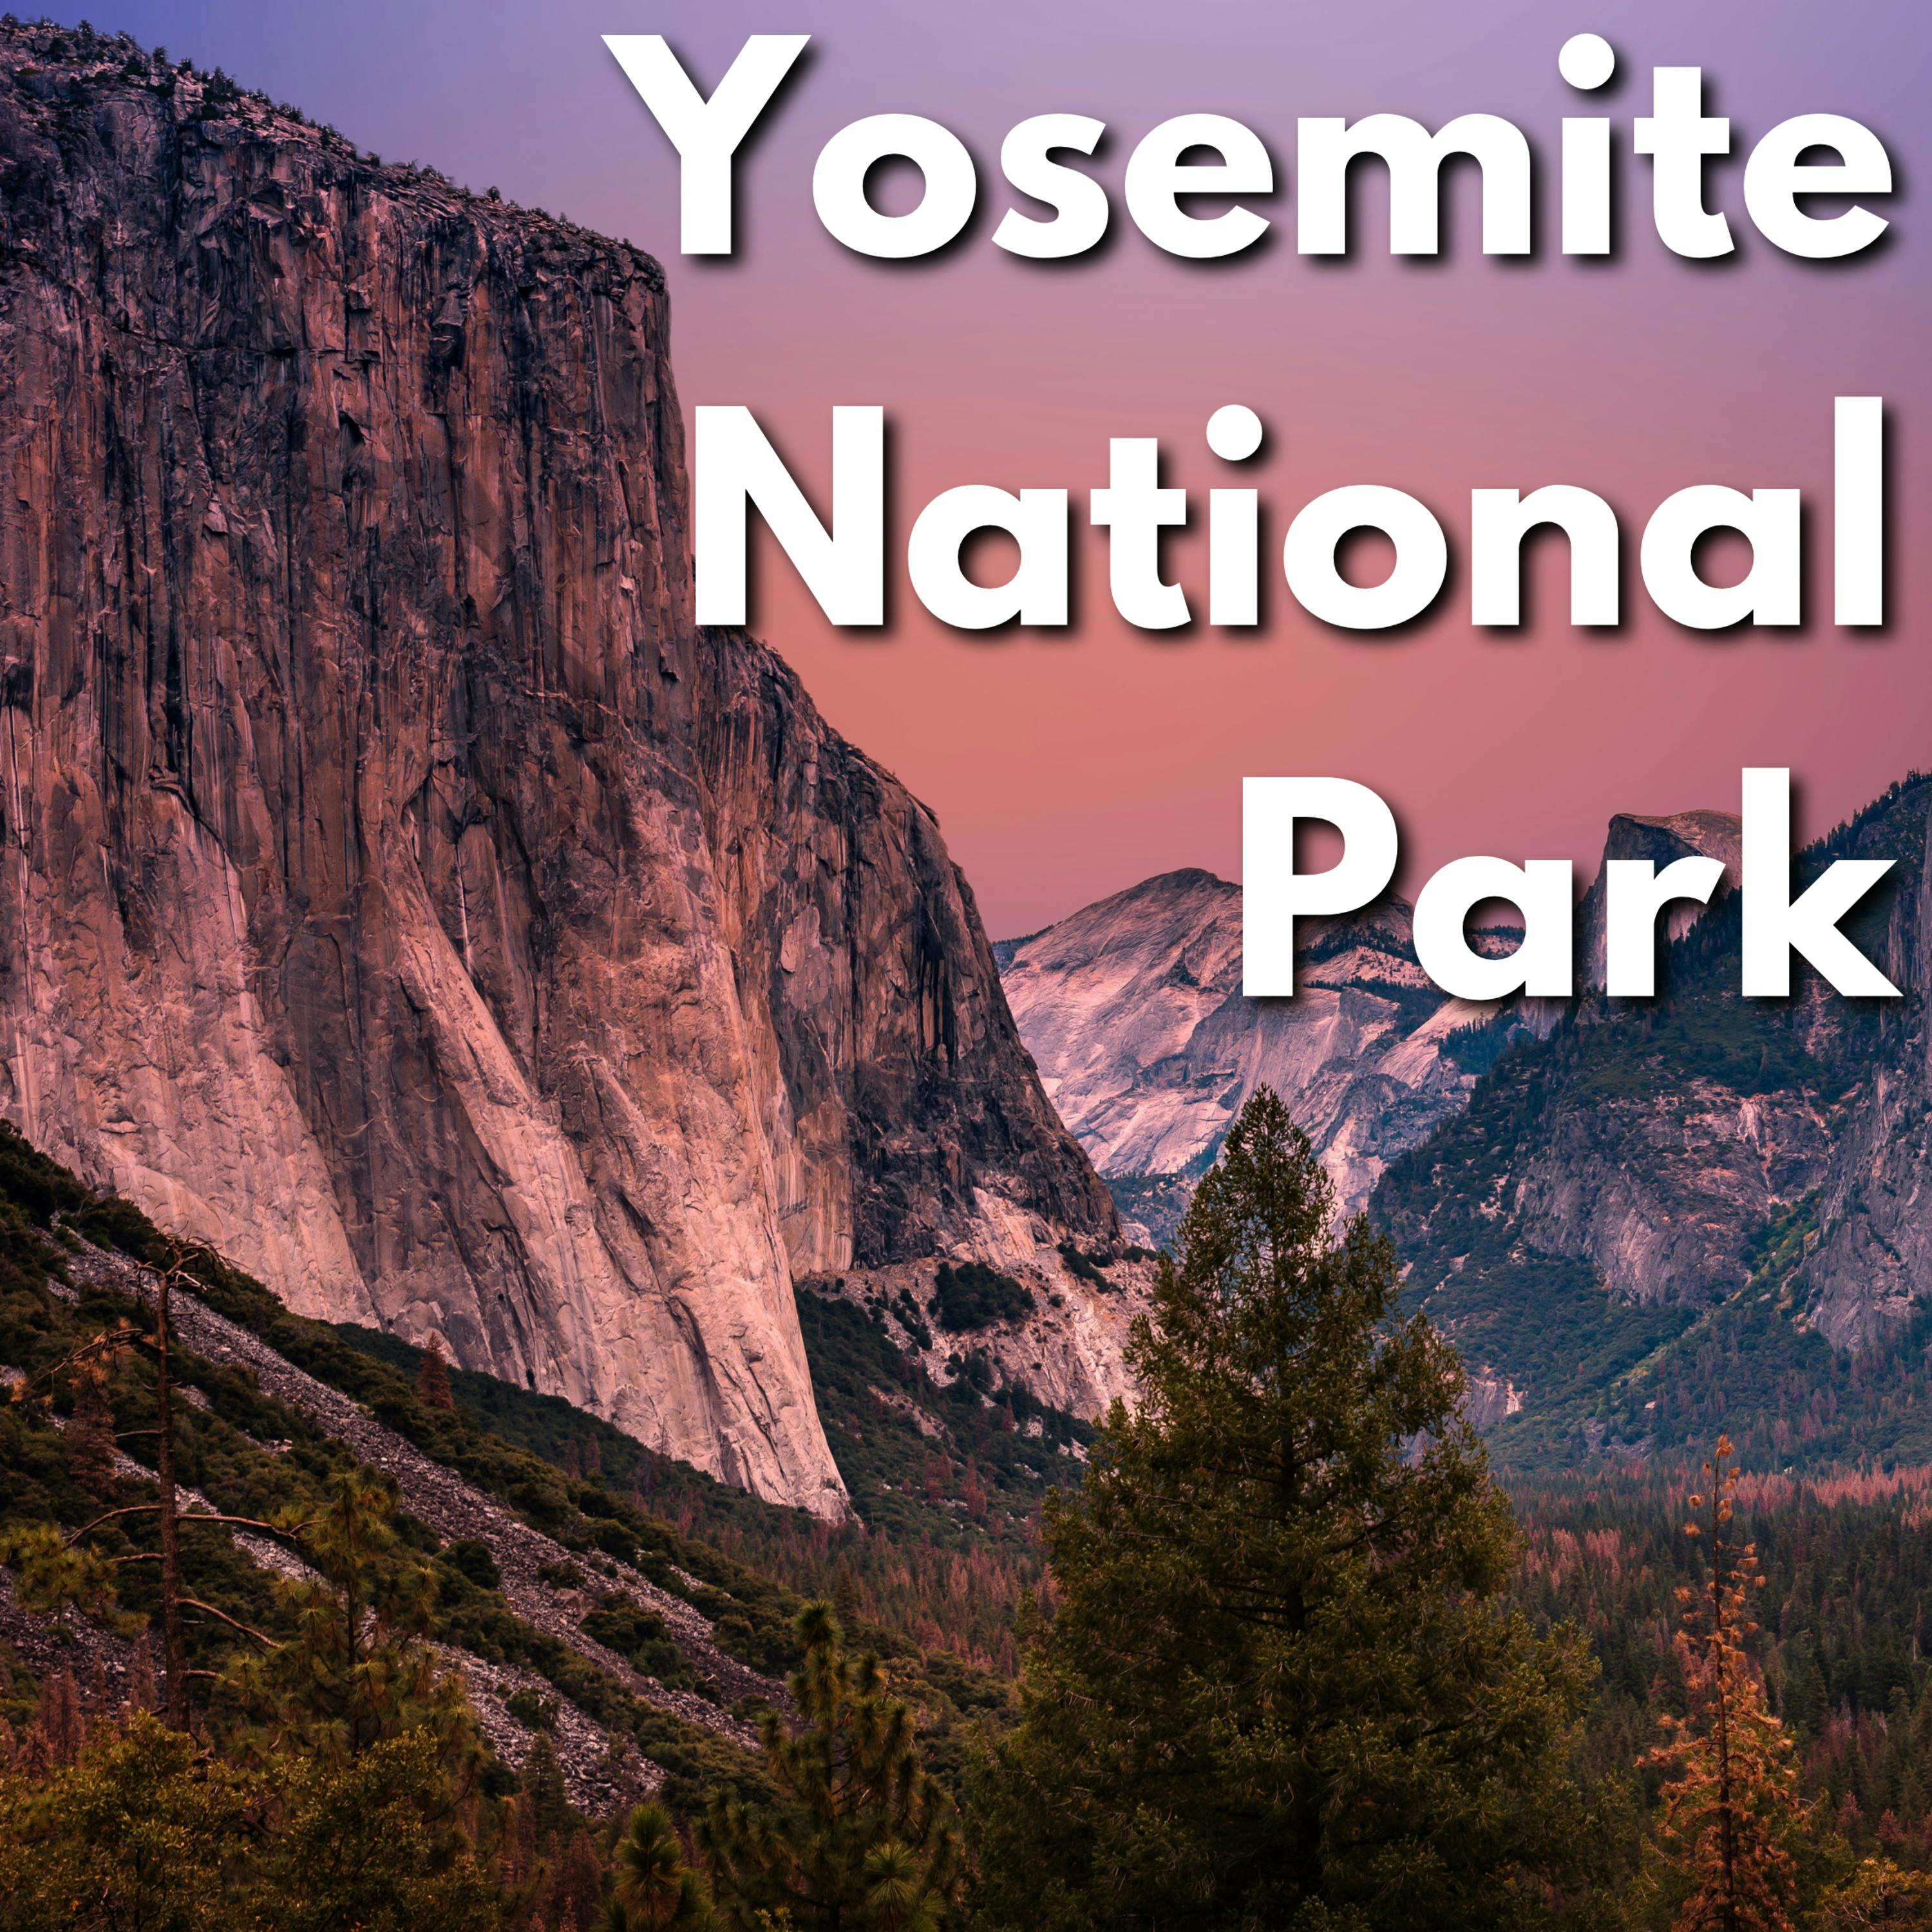 Sleep Meditation - Experience the Nature of Yosemite National Park